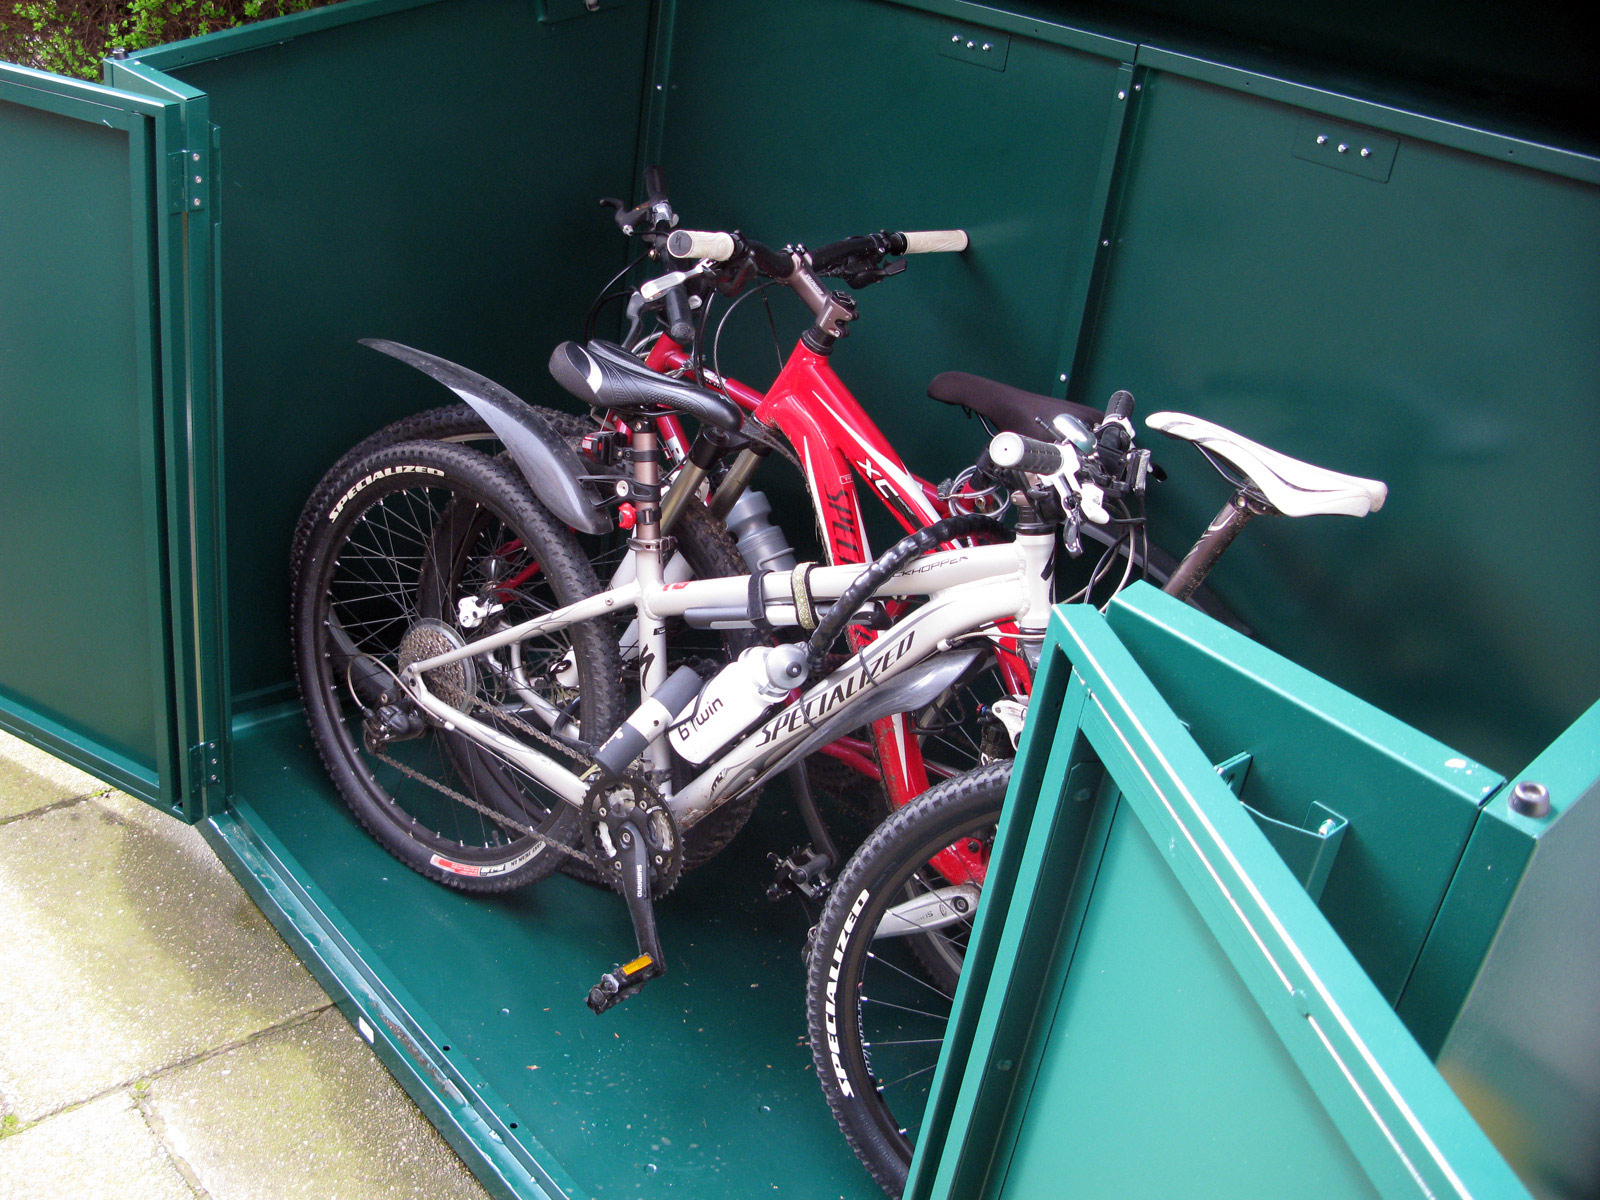 Bike Storage Case Study